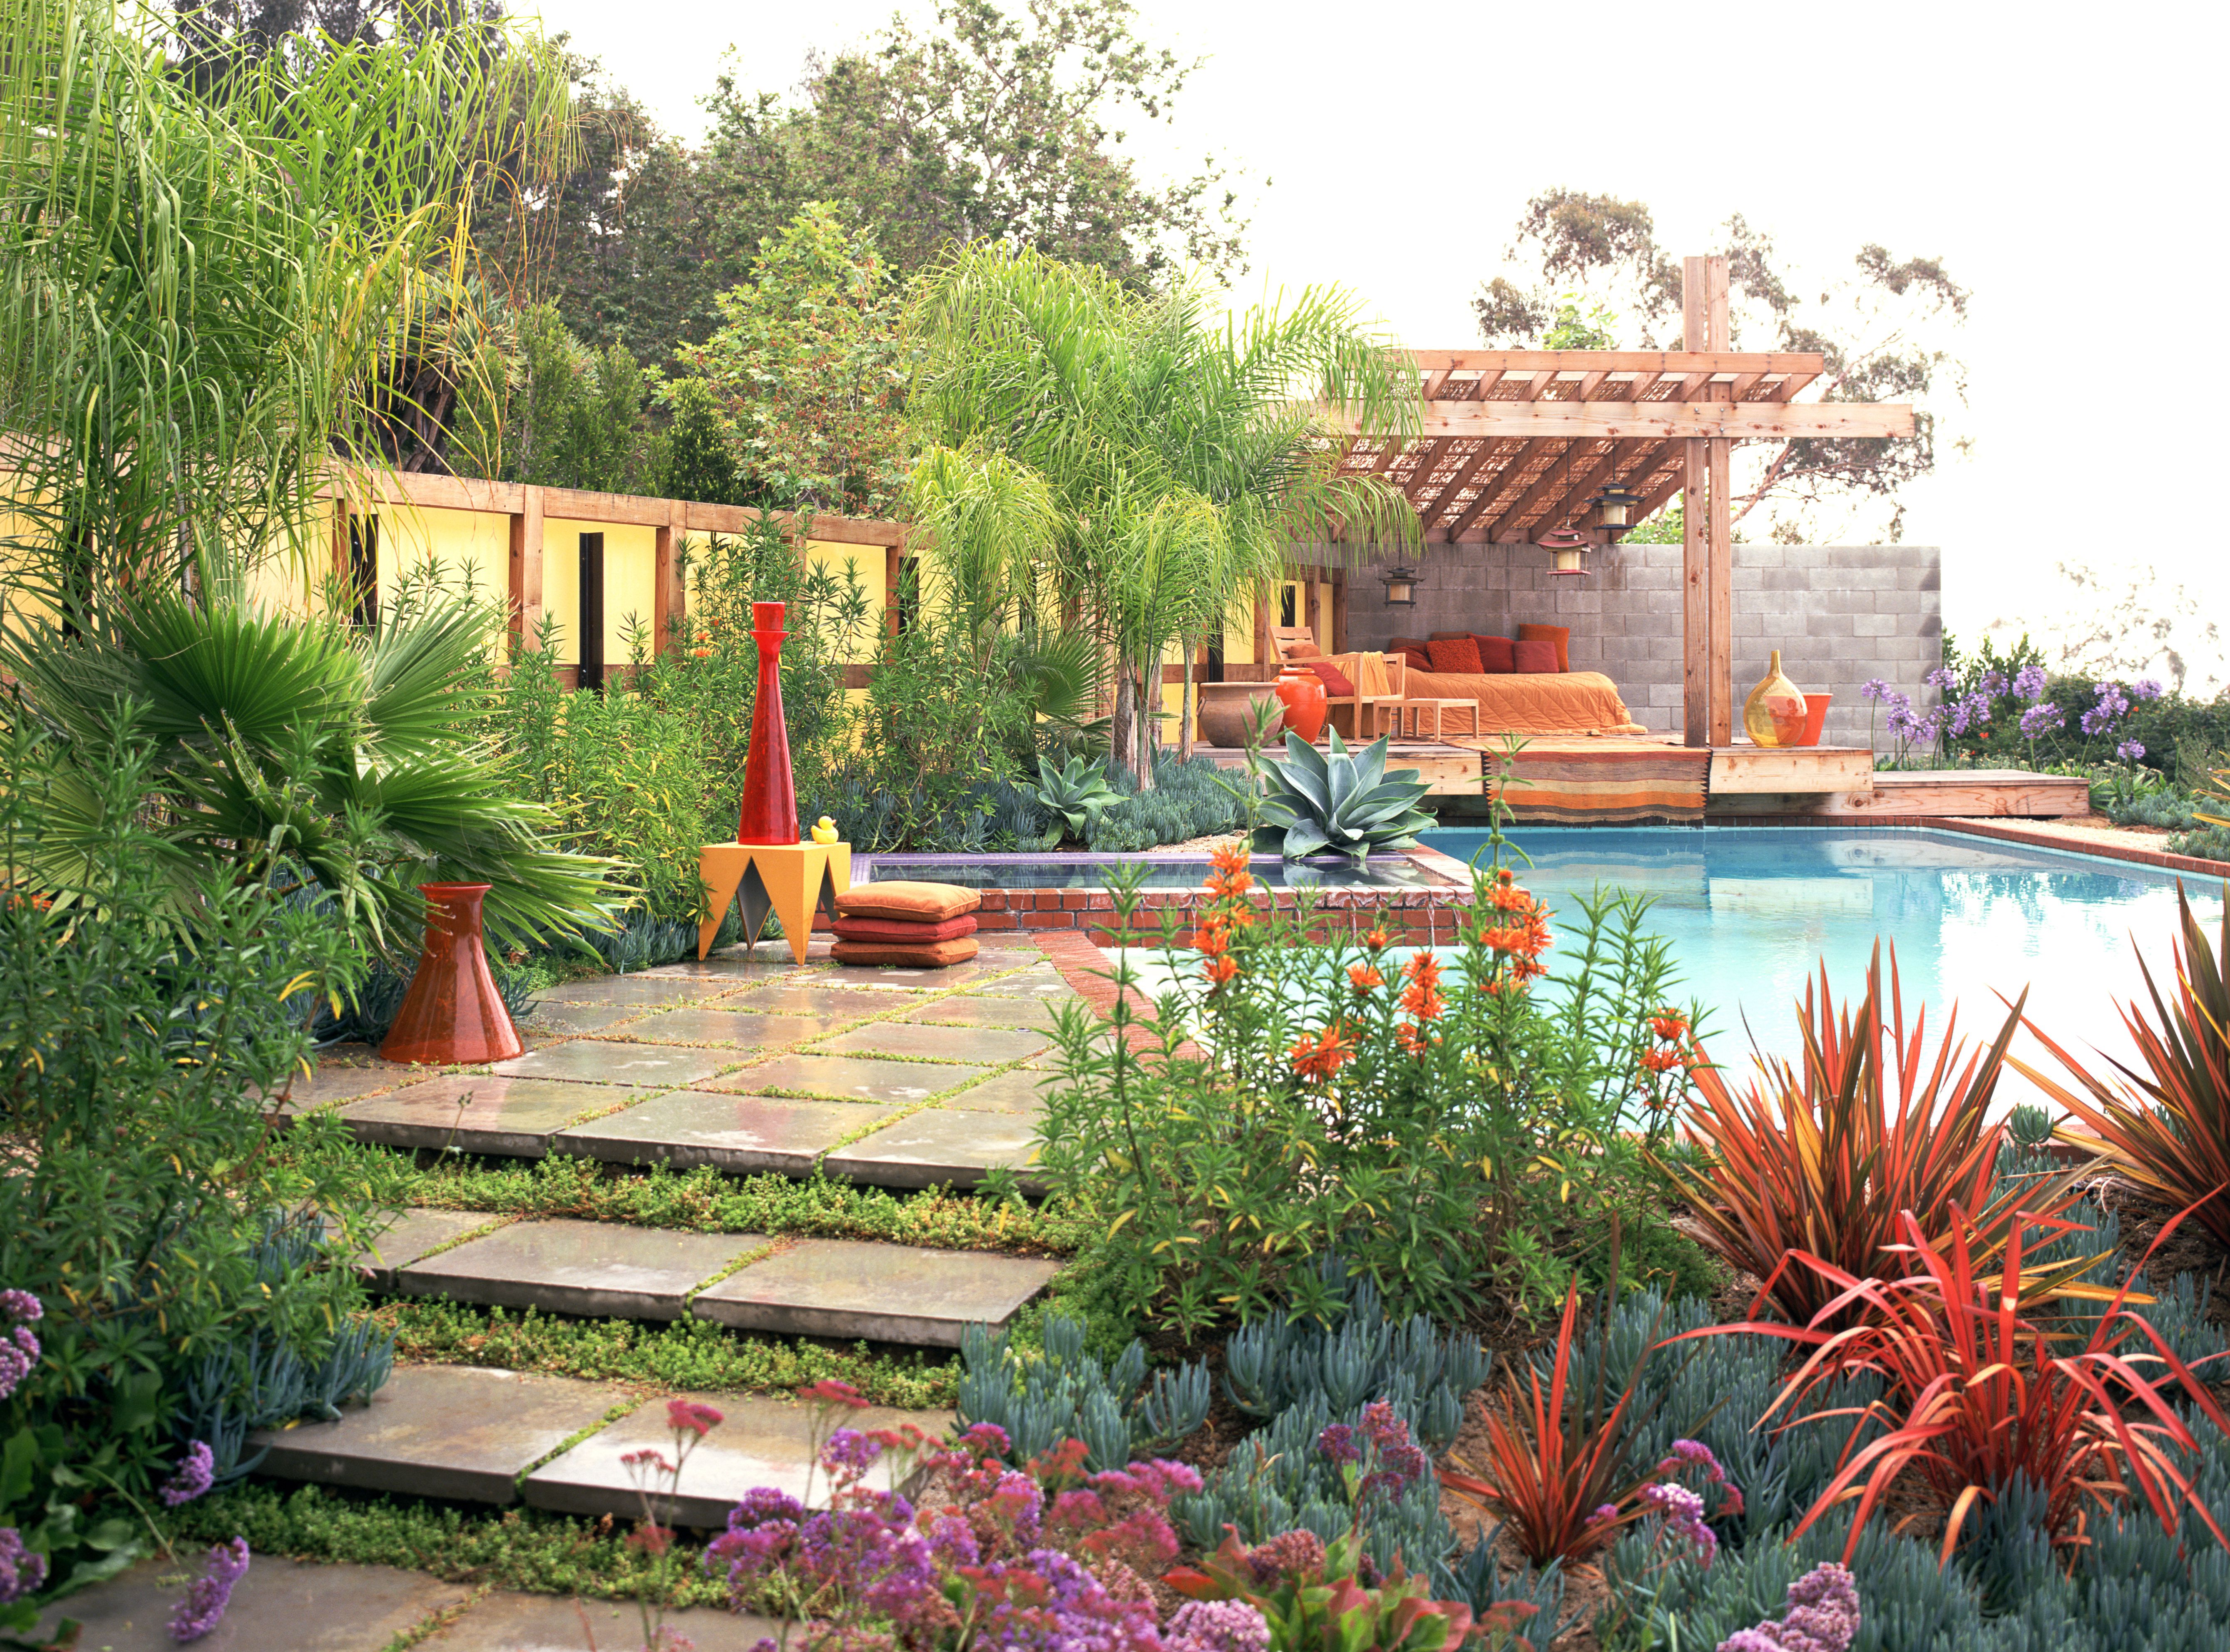  pool garden designs